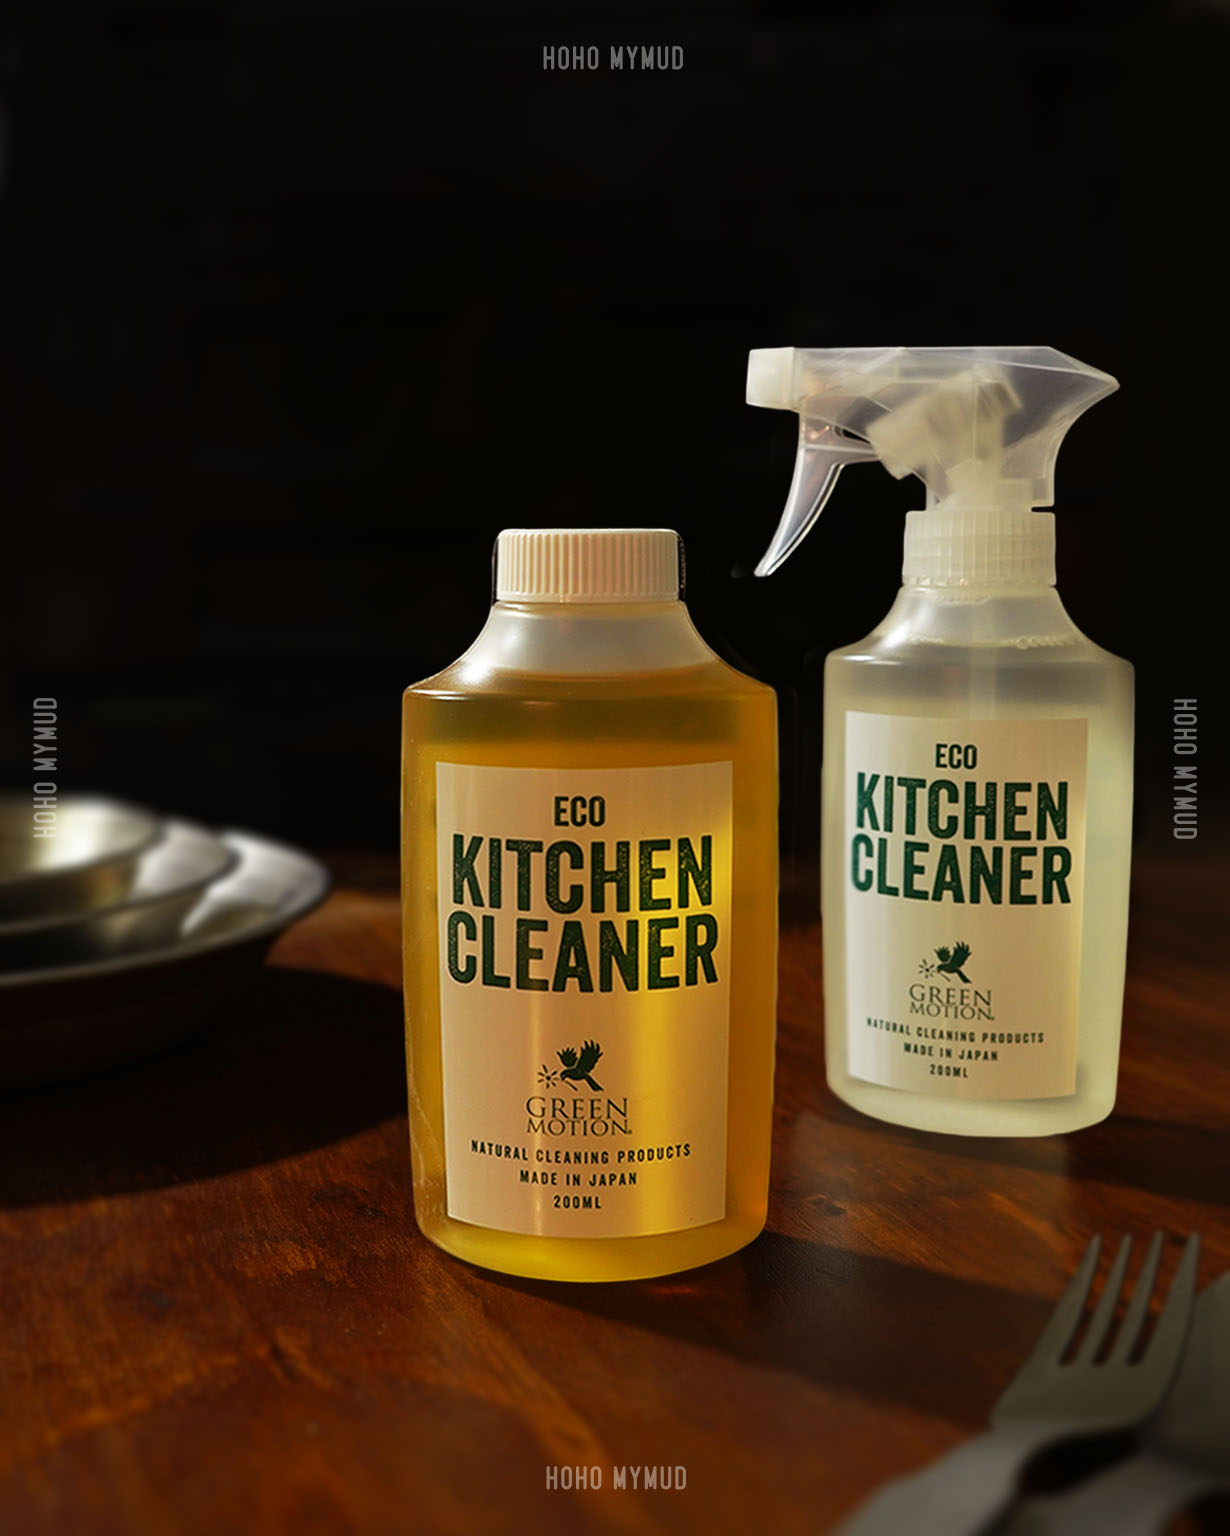 Green motion Eco Kitchen cleaner Bundle - 天然廚房清潔劑 + 濃縮補充裝